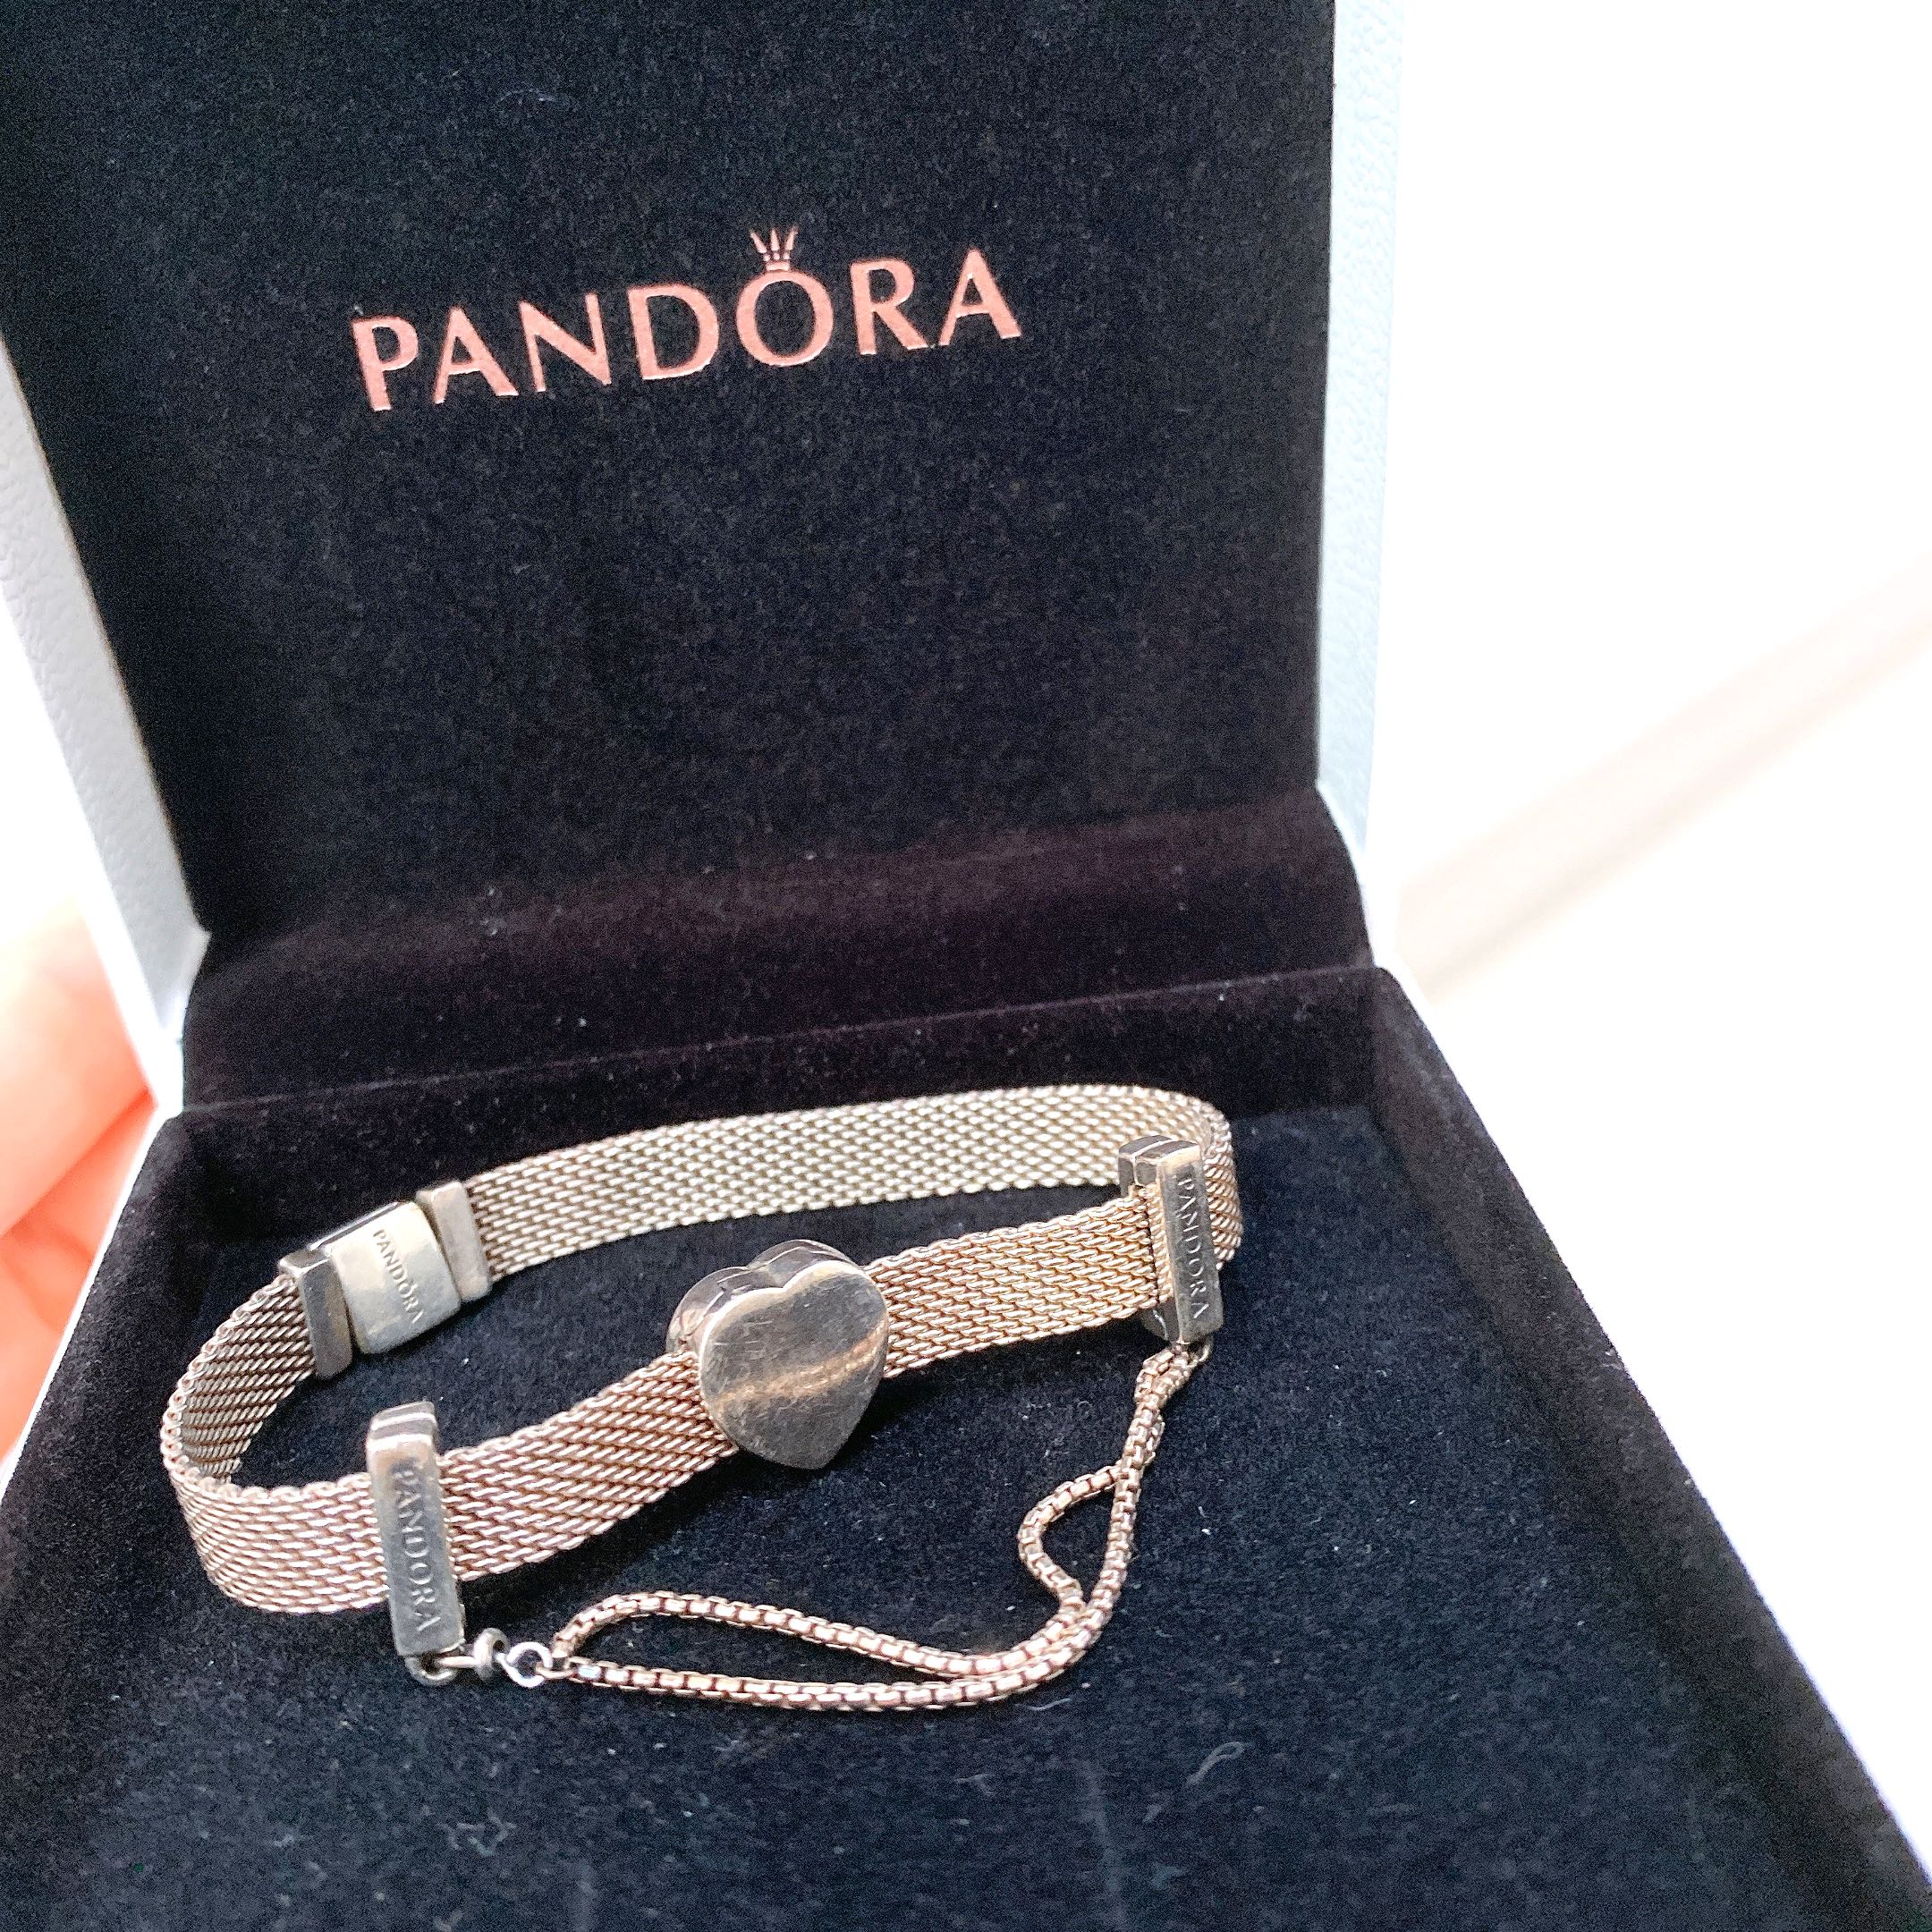 Pandora Reflexions Mesh Bracelet 597712-21 - Jacob Time Inc